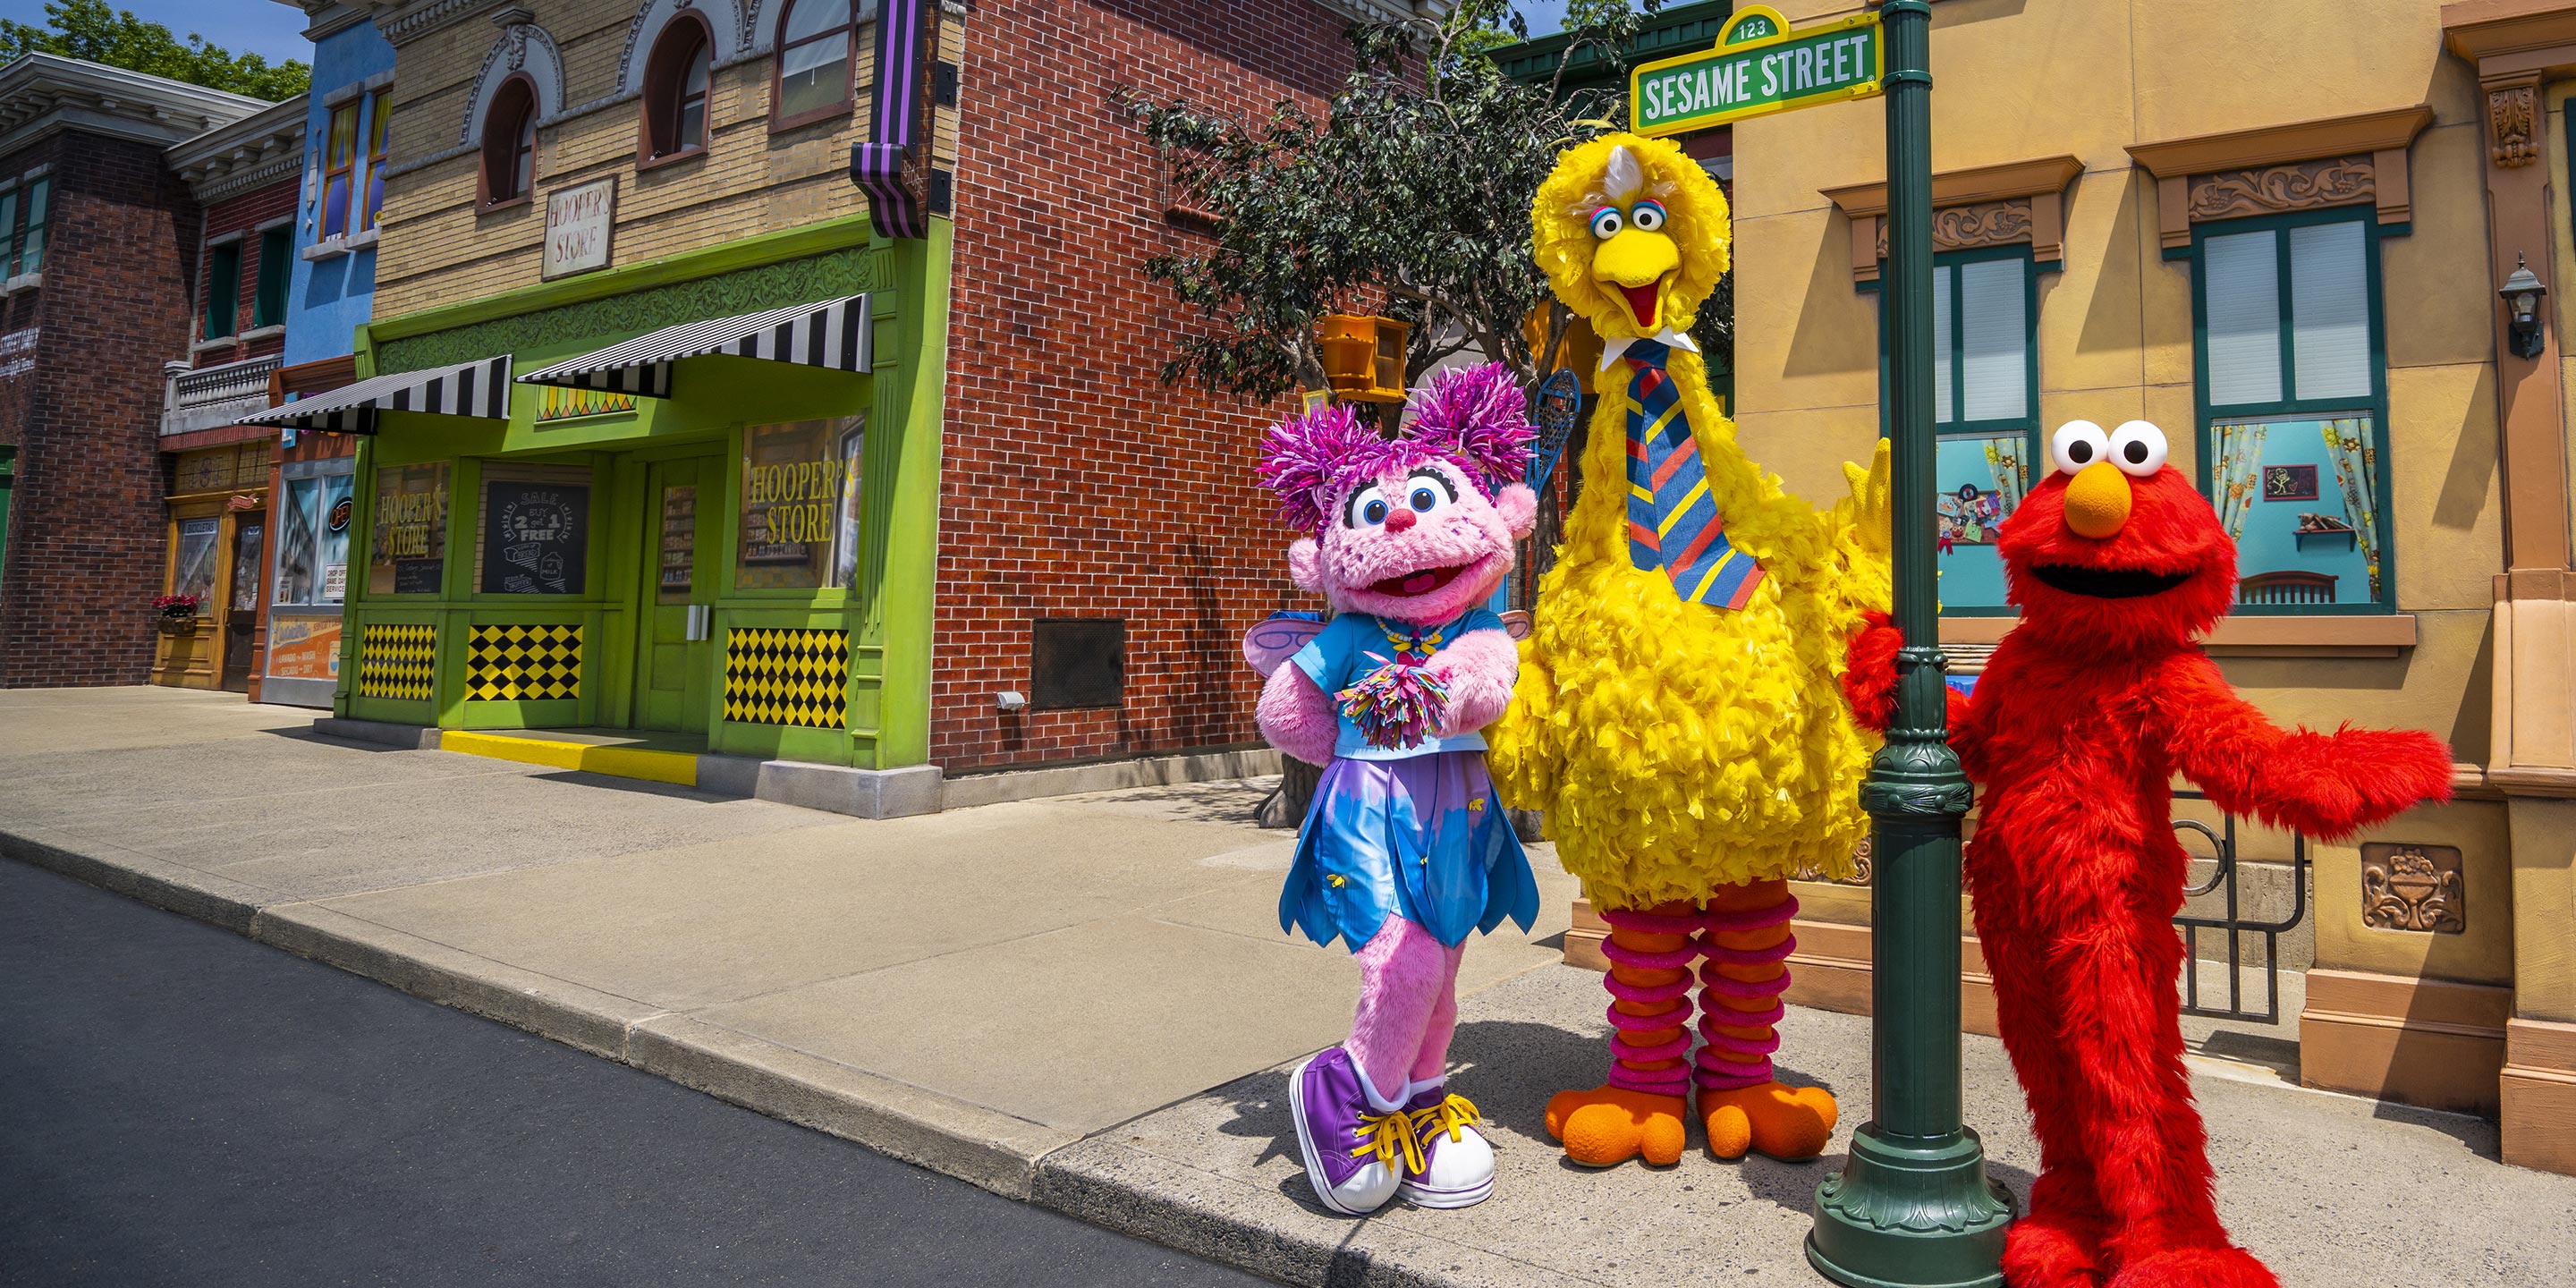 Big bird, Elmo and Abby Cadabby on the street next to Sesame Street sign